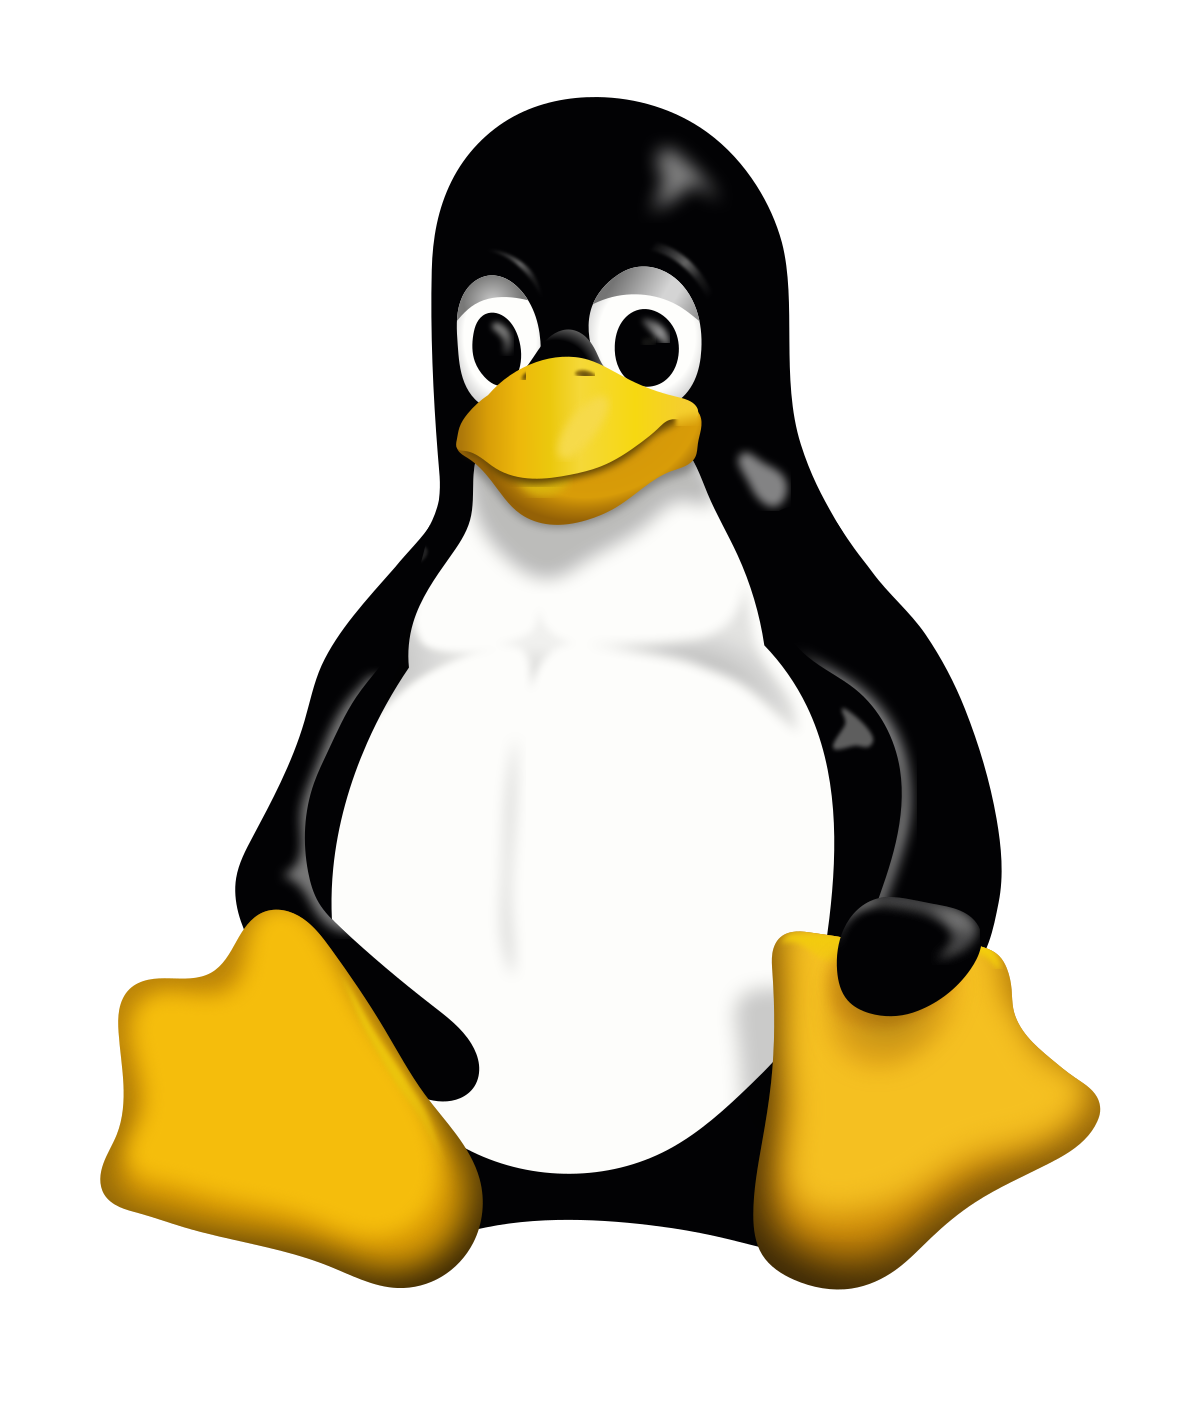 Linux Kernel Coding Style